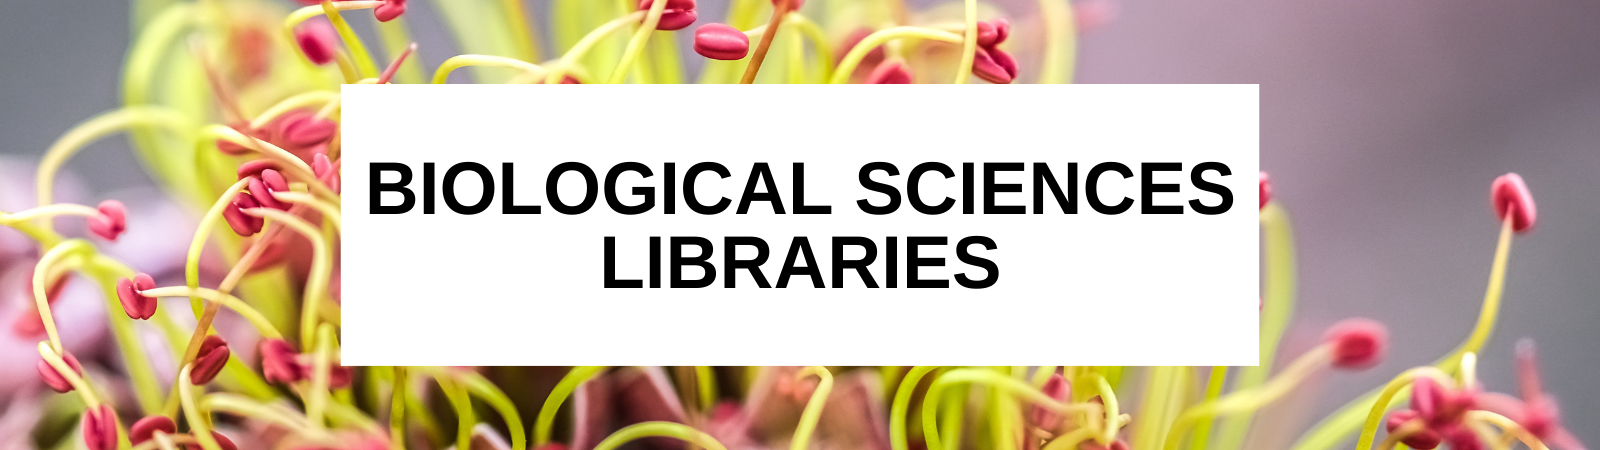 Biological Sciences Libraries